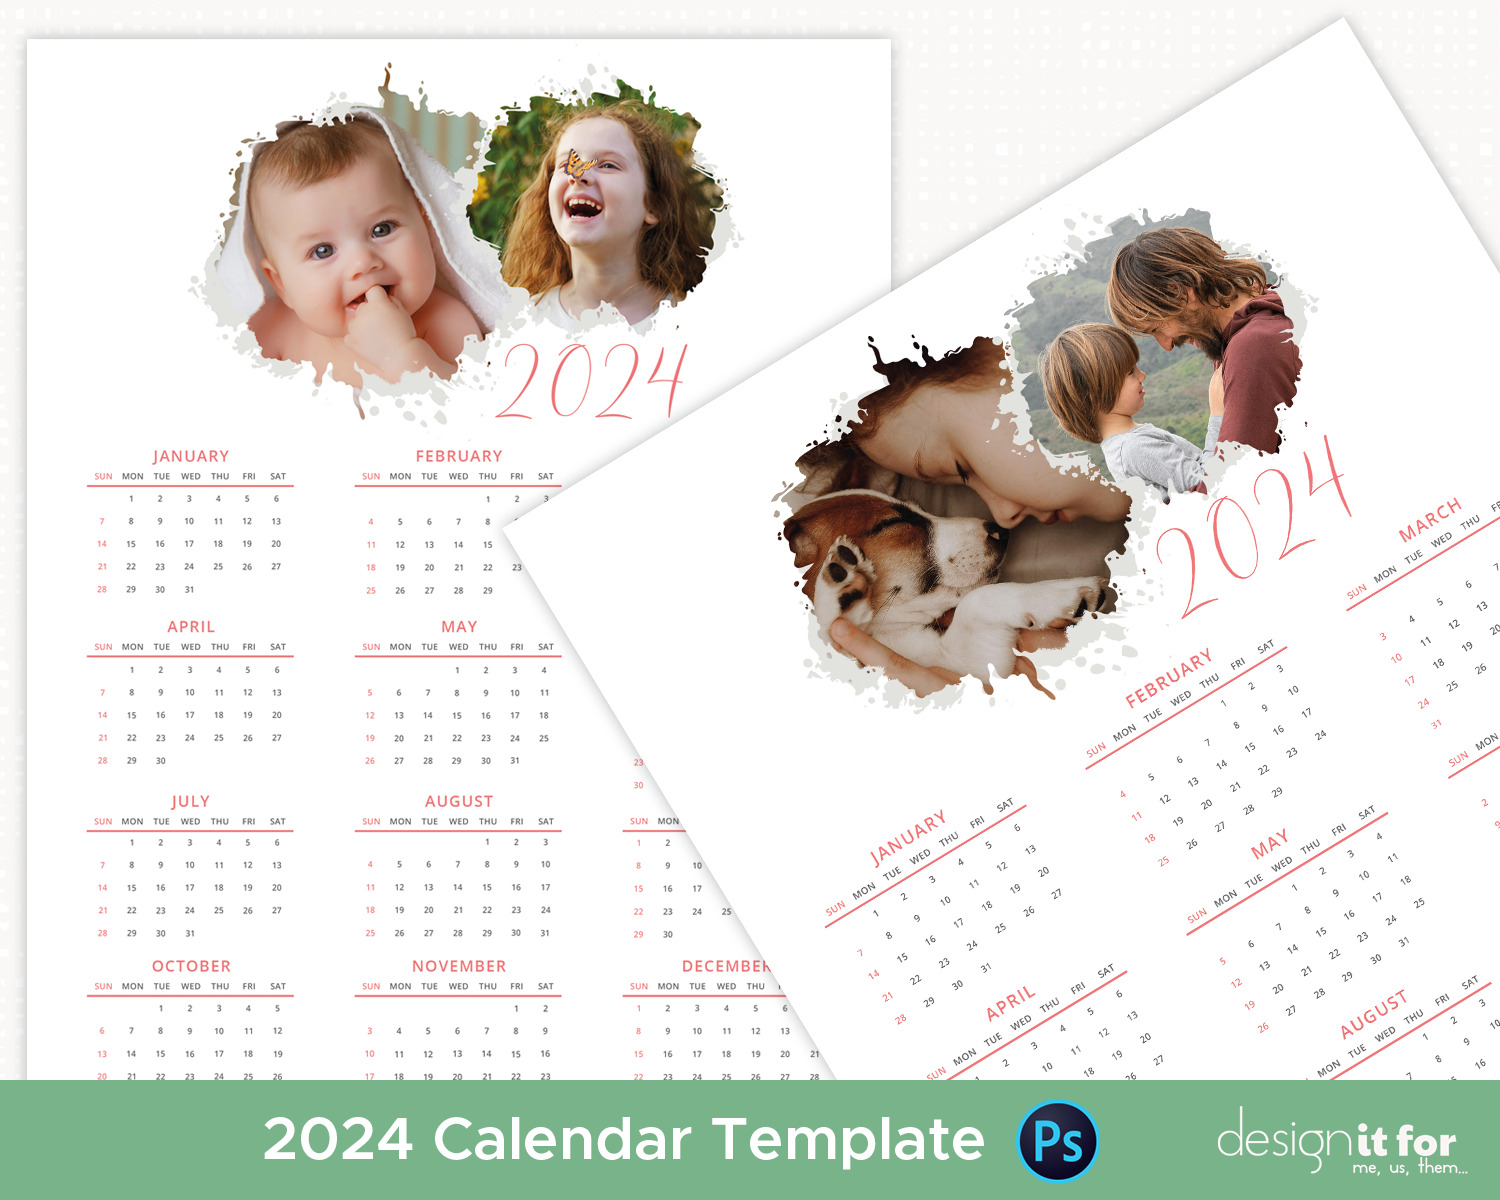 2024 Calendar Template, Printable Photo Calendar, Year Calendar, Wall